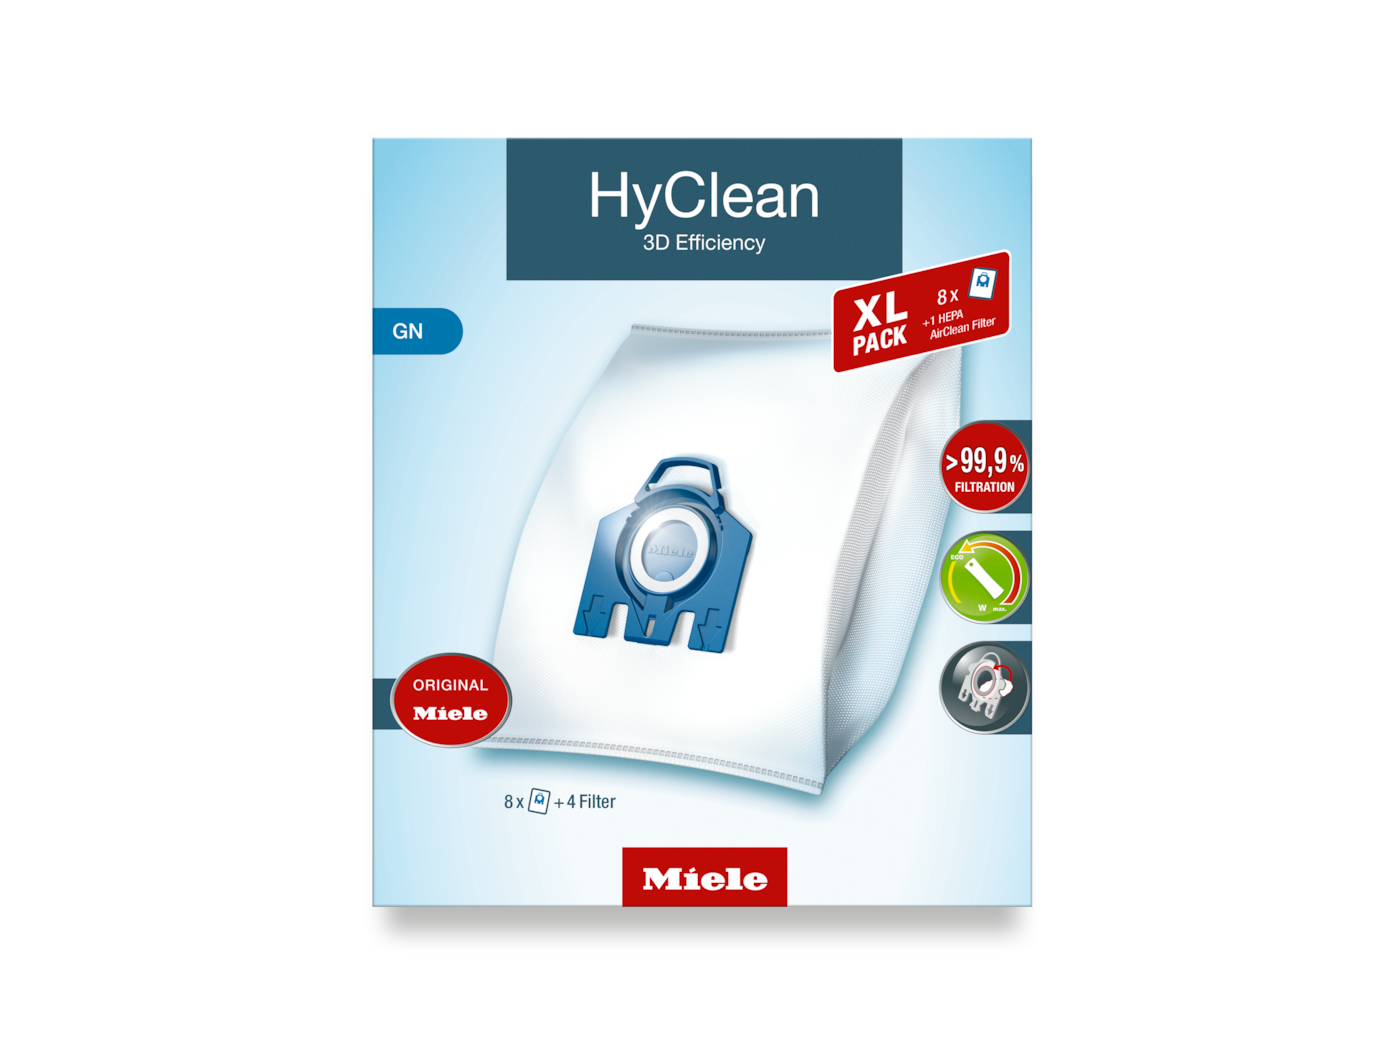 GN Allergy XL HyClean 3D